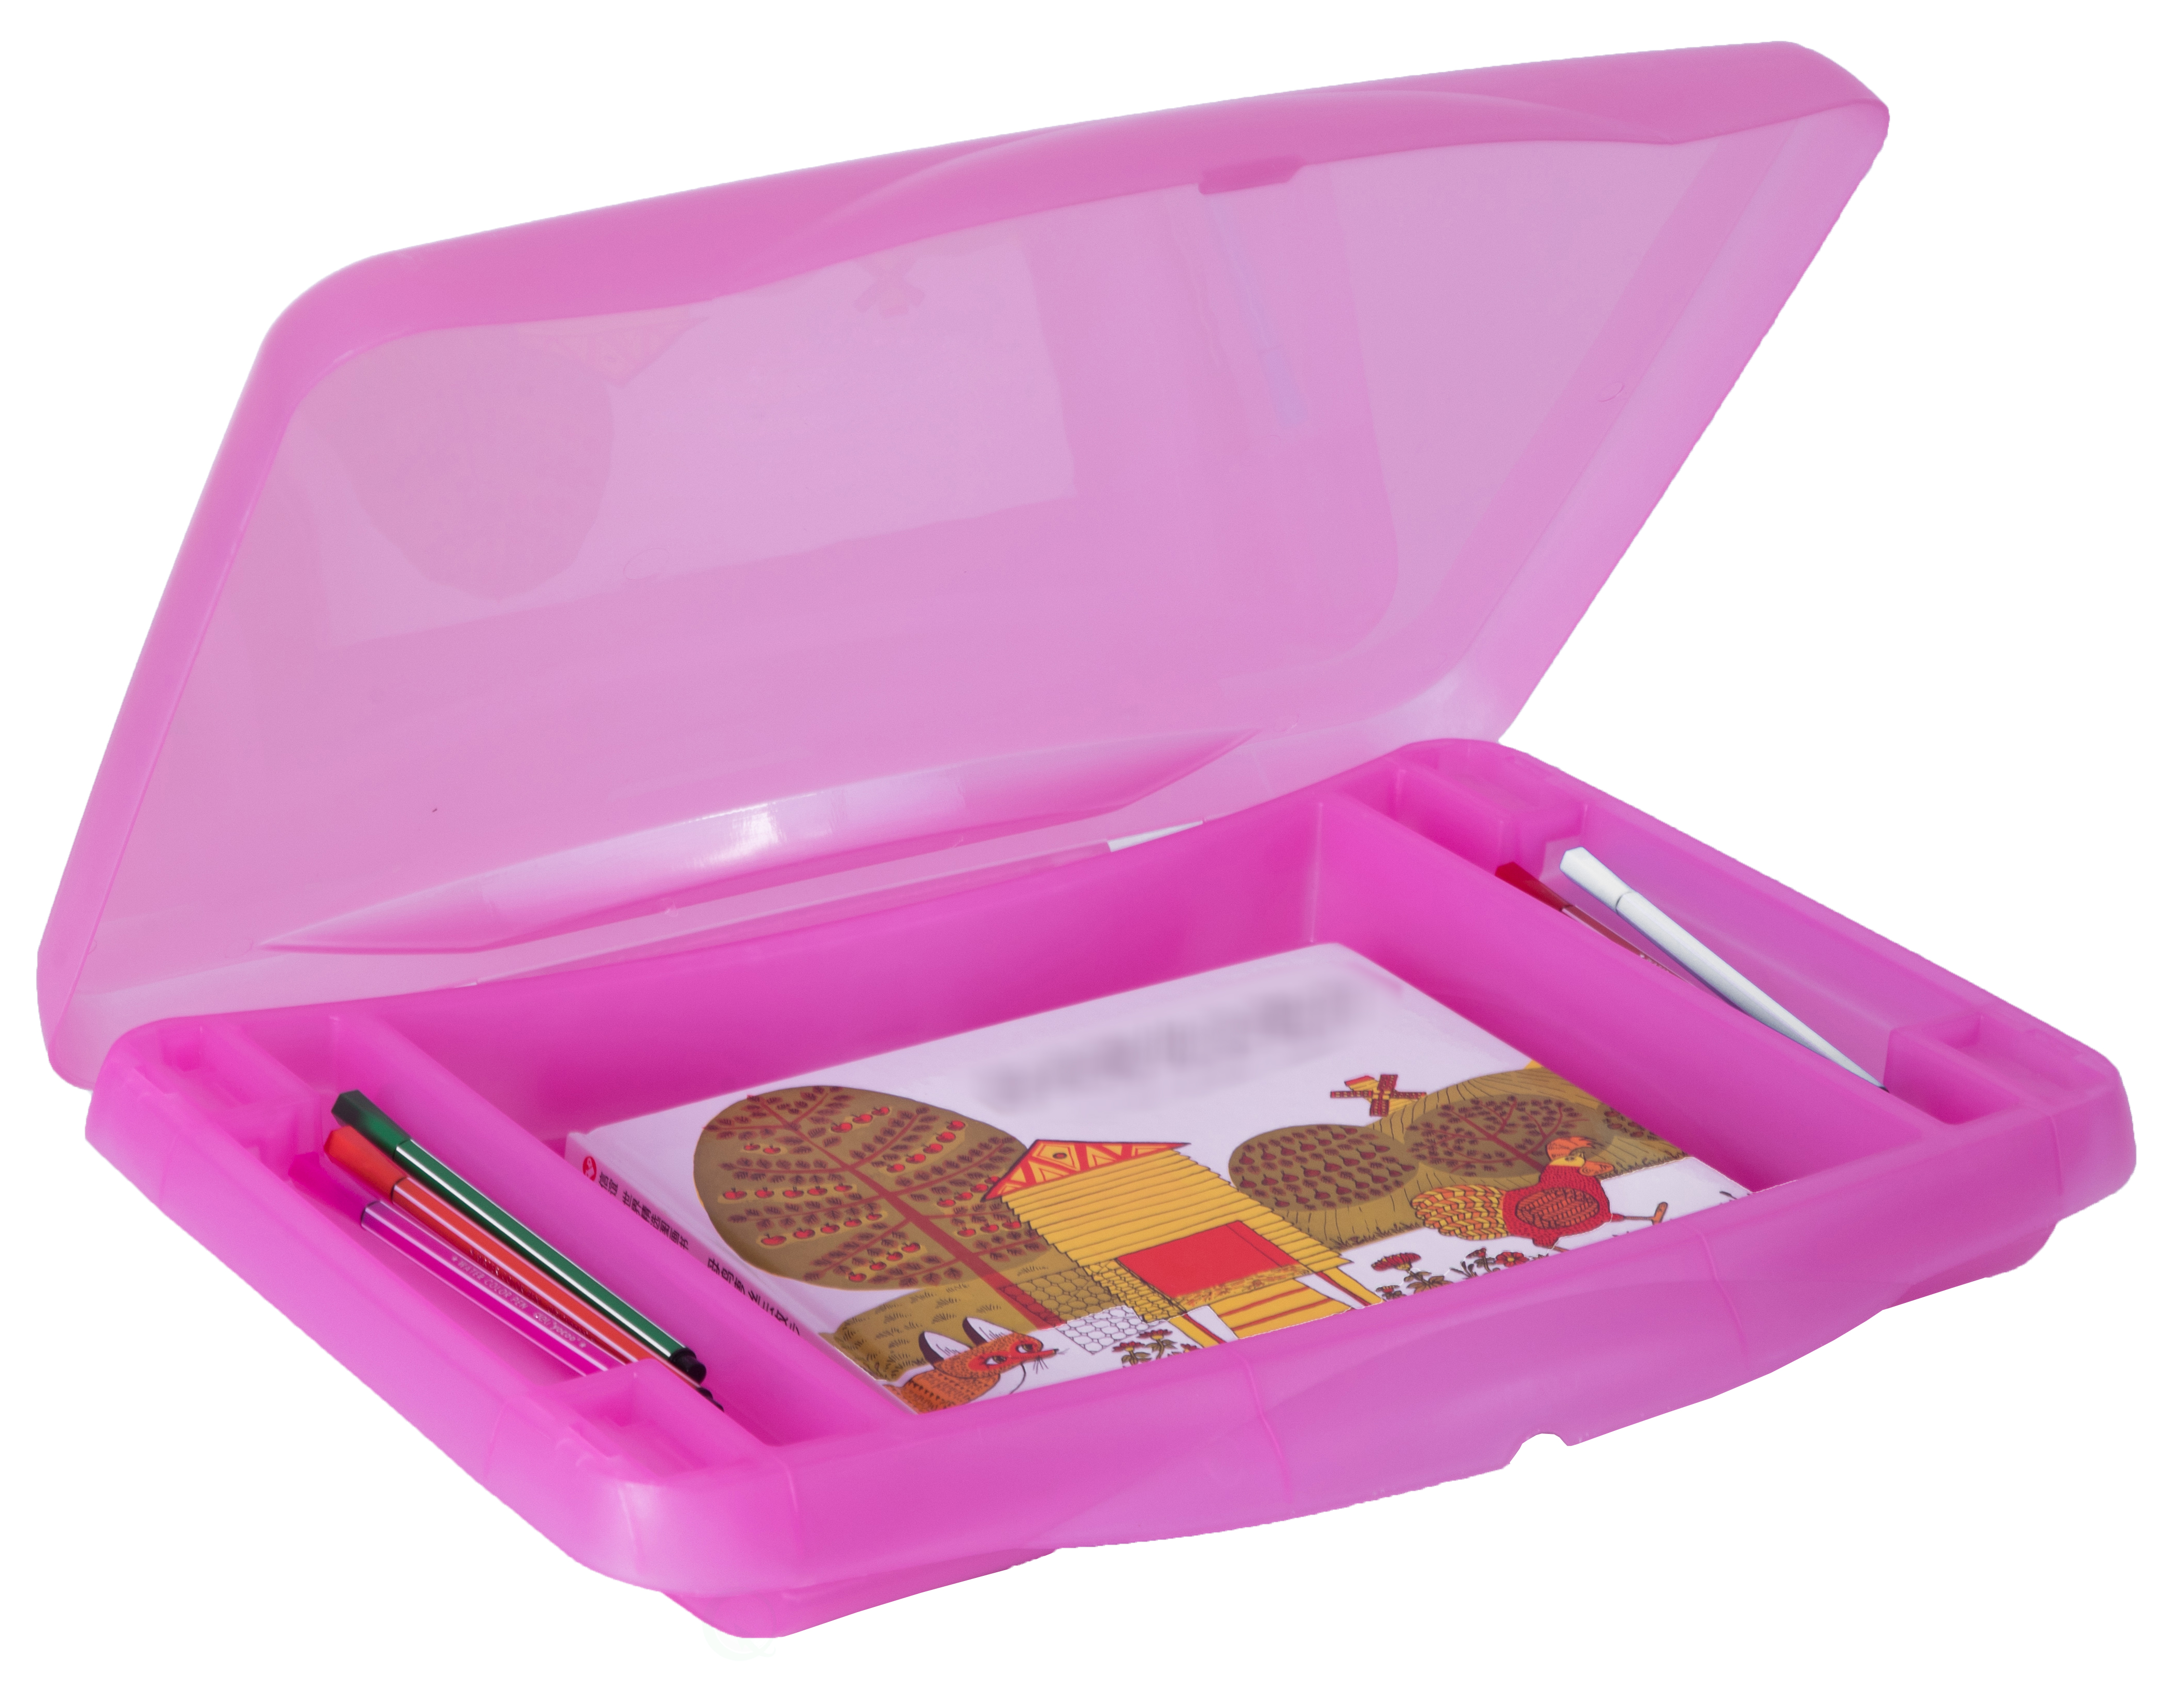 New Basicwise Kids Portable Translucent Plastic Lap Tray